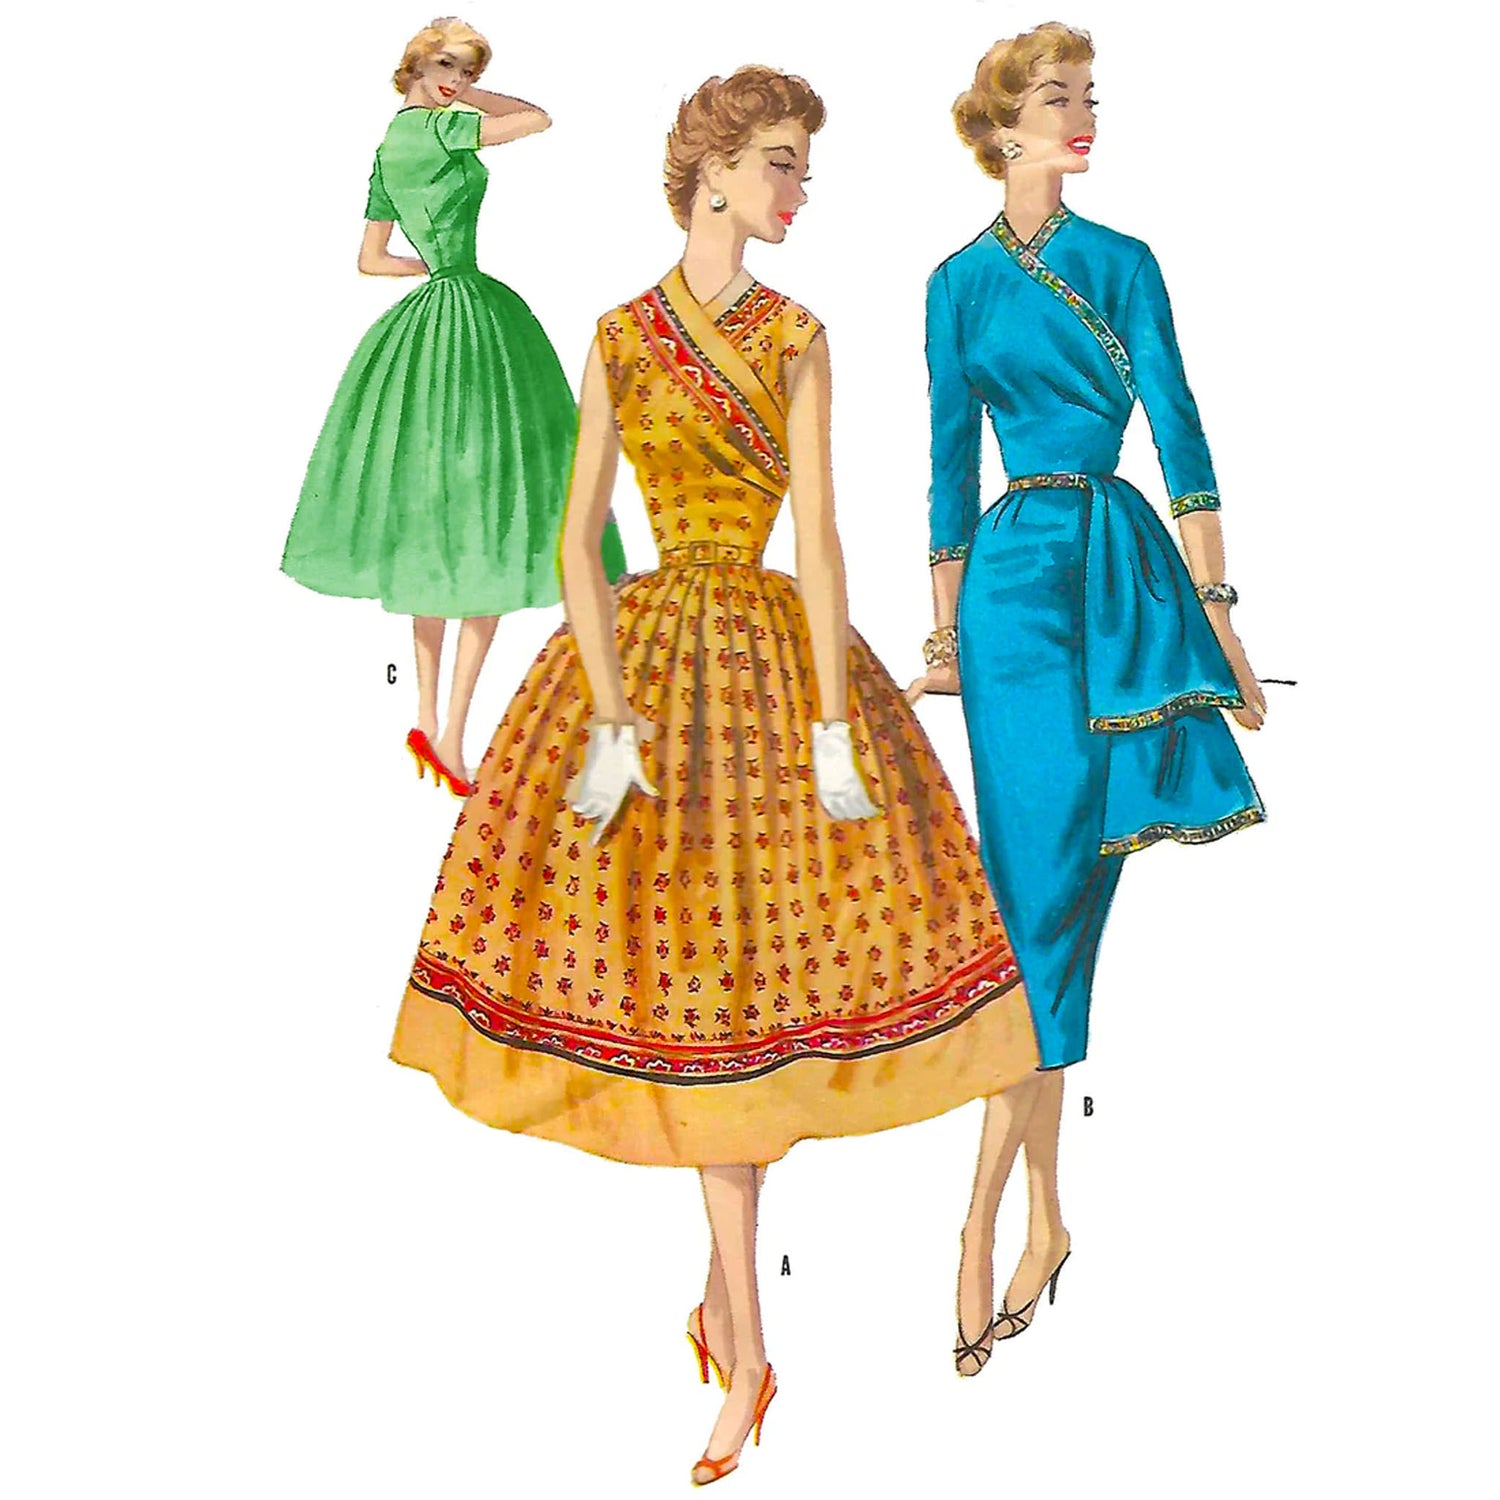 Dress patterns | Wardrobe By Me - We love sewing!